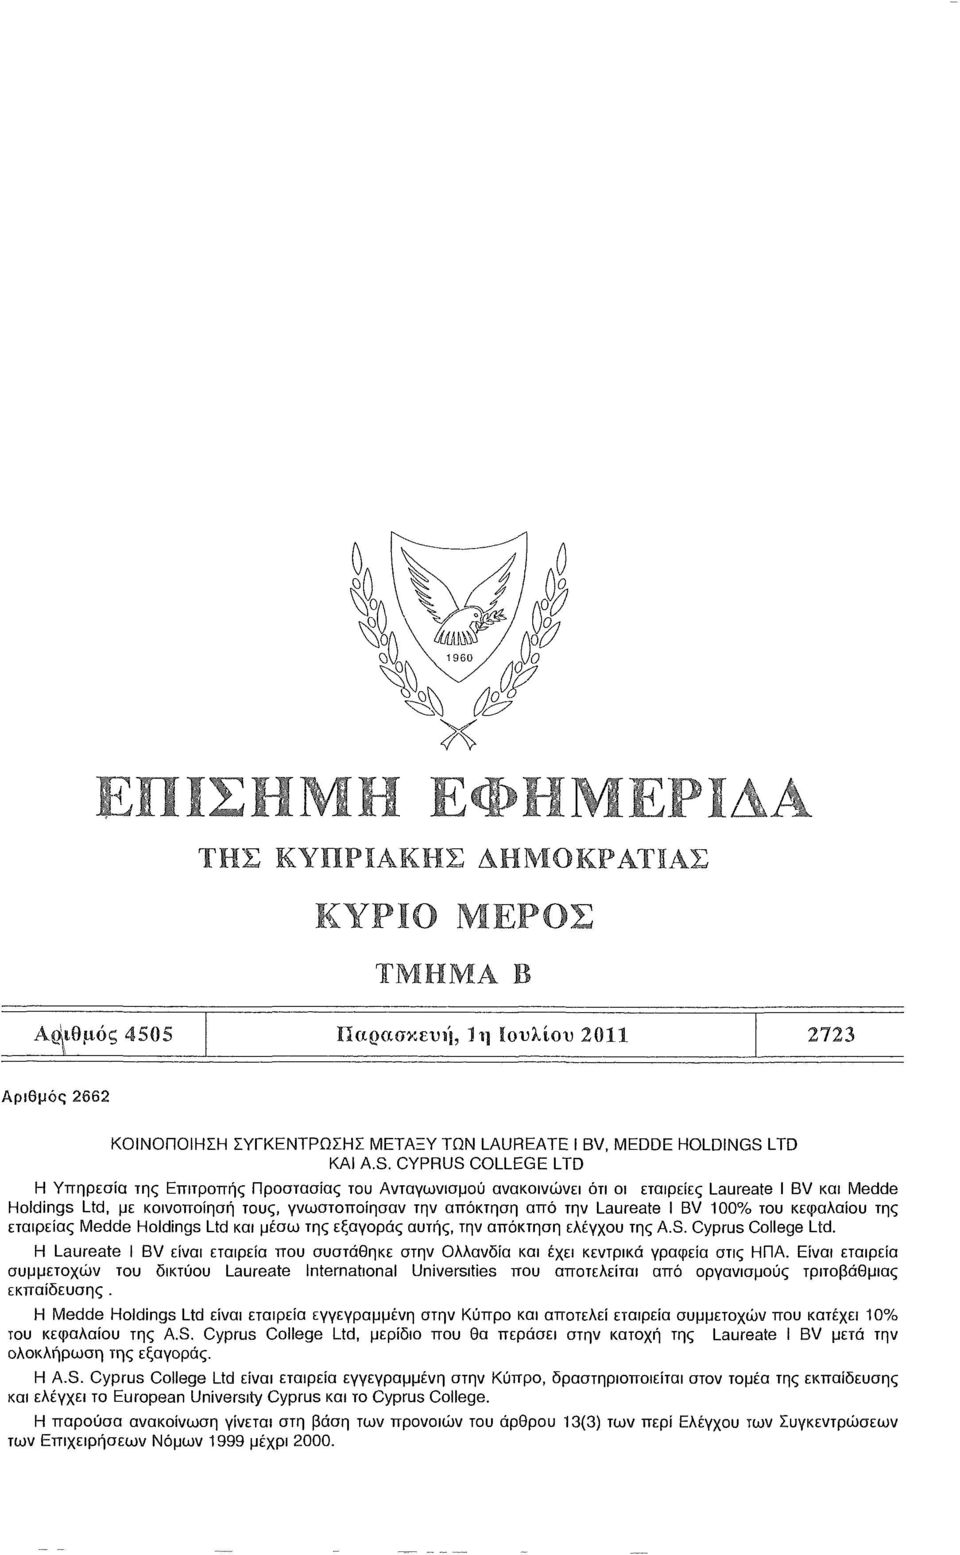 CYPRUS COLLEGE LTD Η Υπηρεσία της Επιτροπής Προστασίας του Ανταγωνισμού ανακοινώνει ότι οι εταιρείες Laureate I BV και Medde Holdings Ltd, με κοινοποίηση τους, γνωστοποίησαν την απόκτηση από την